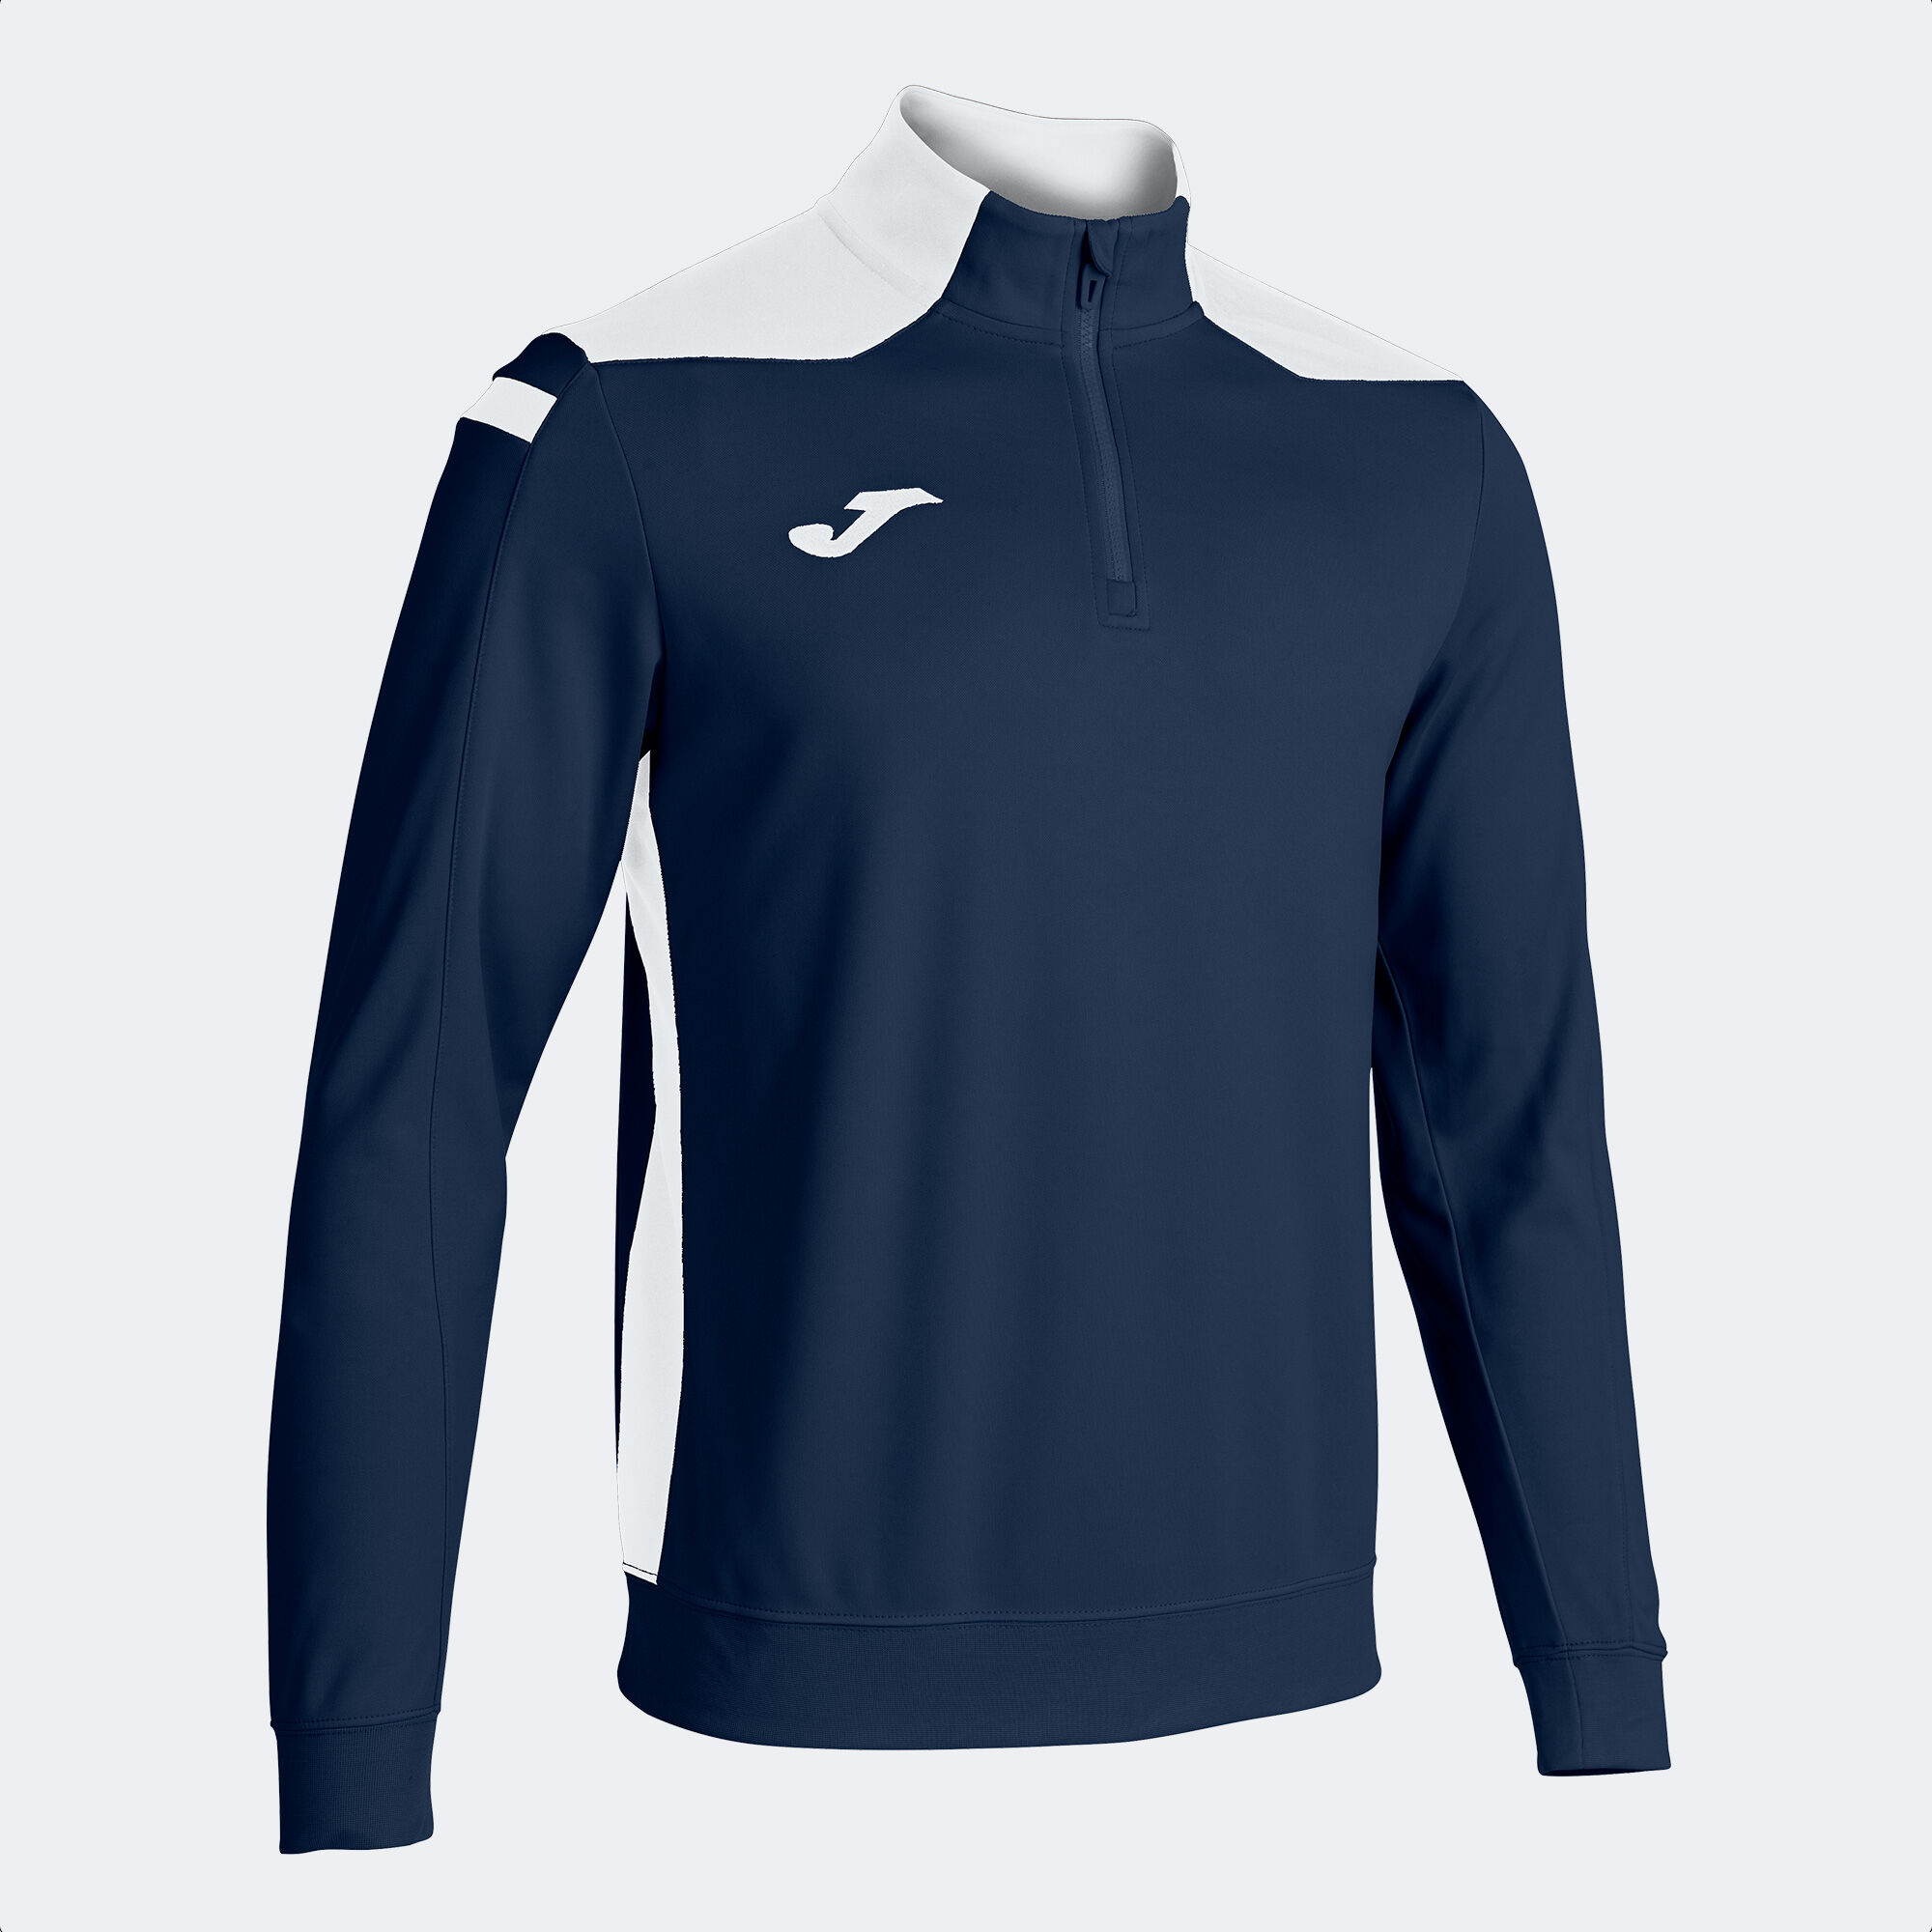 Sweat-shirt homme Championship VI bleu marine blanc